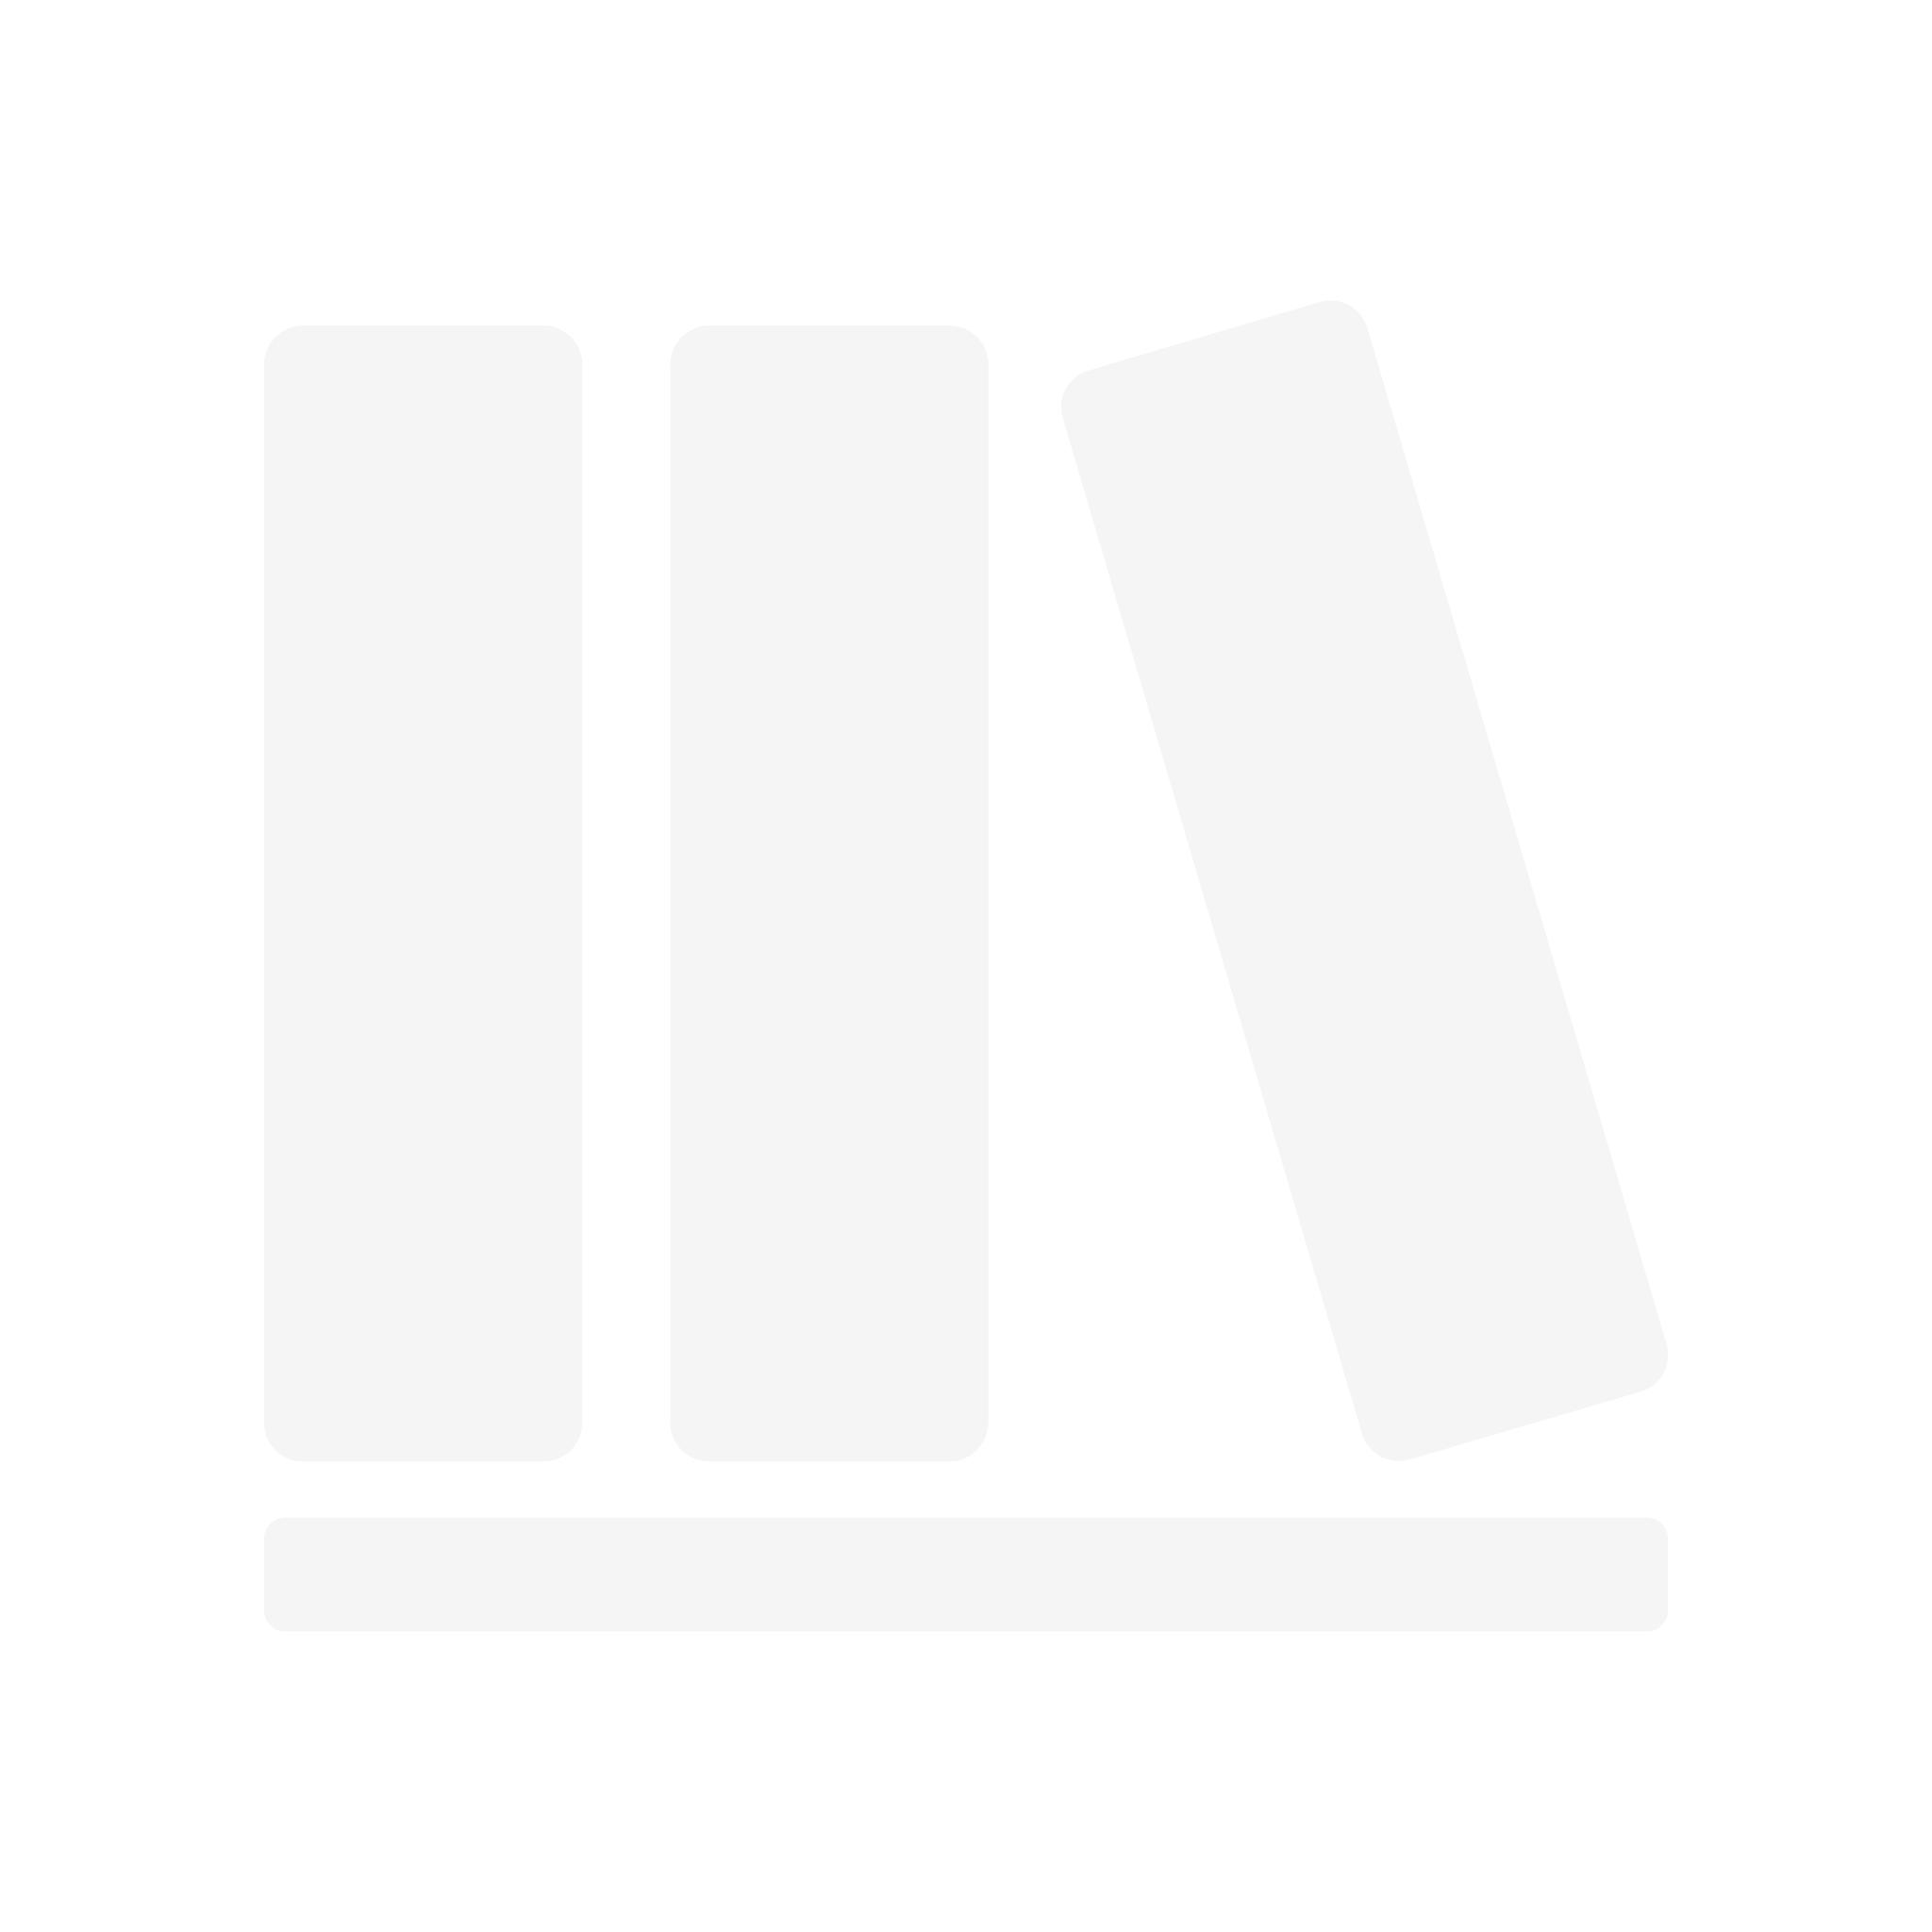 The StoryGraph logo